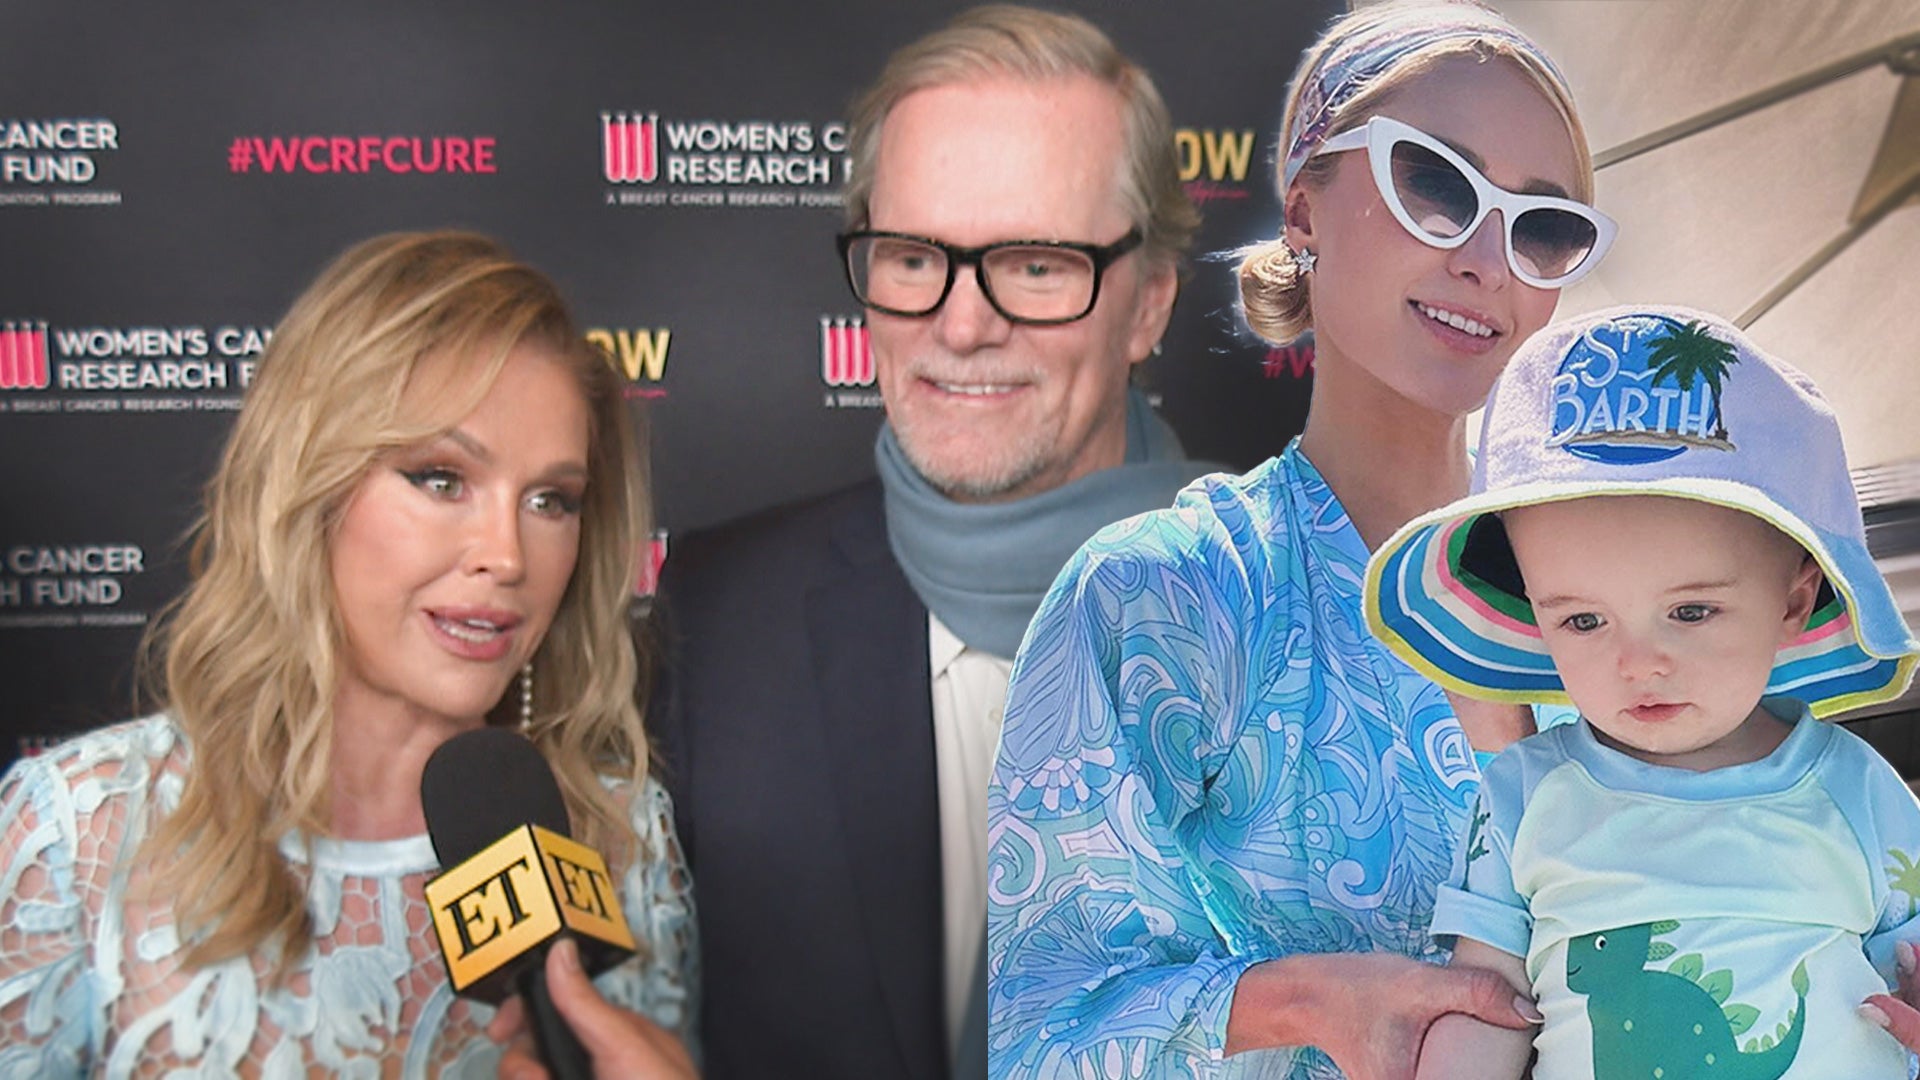 Paris Hilton's Parents Kathy and Rick Give Update on Grandkids Phoenix and London (Exclusive)  